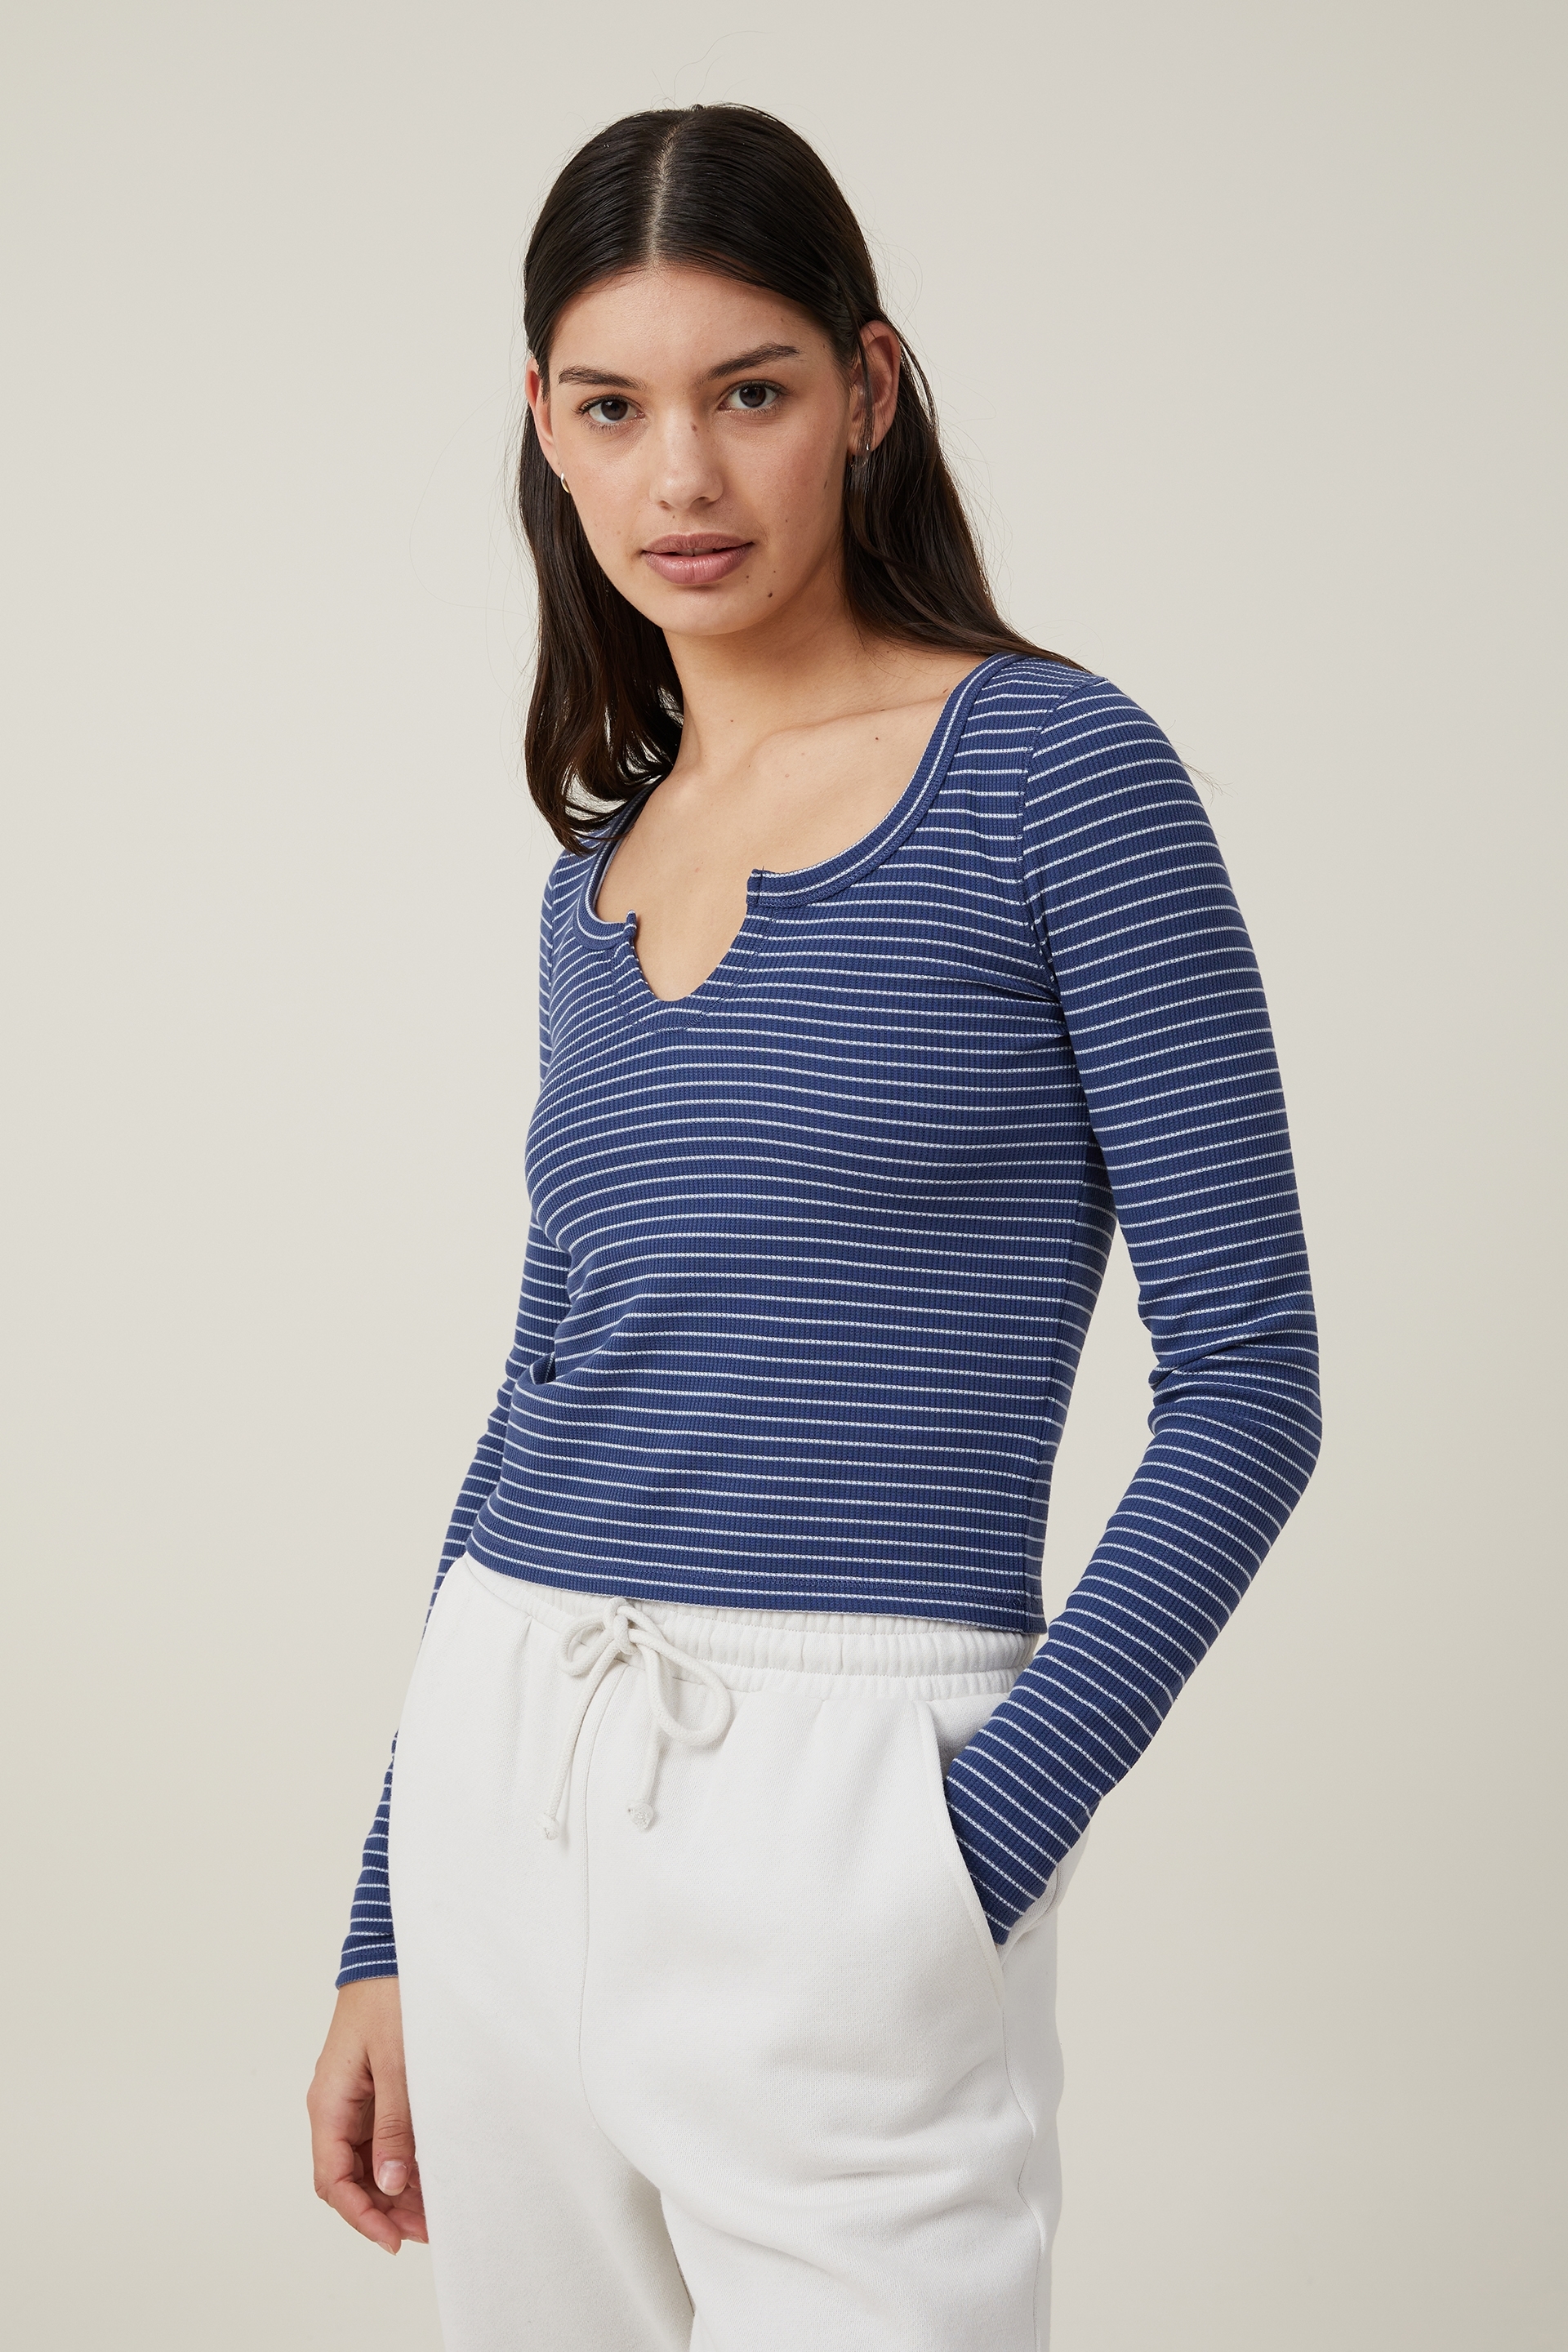 Cotton On Women - Willa Waffle Long Sleeve Top - Chloe stripe vintage navy/glacier